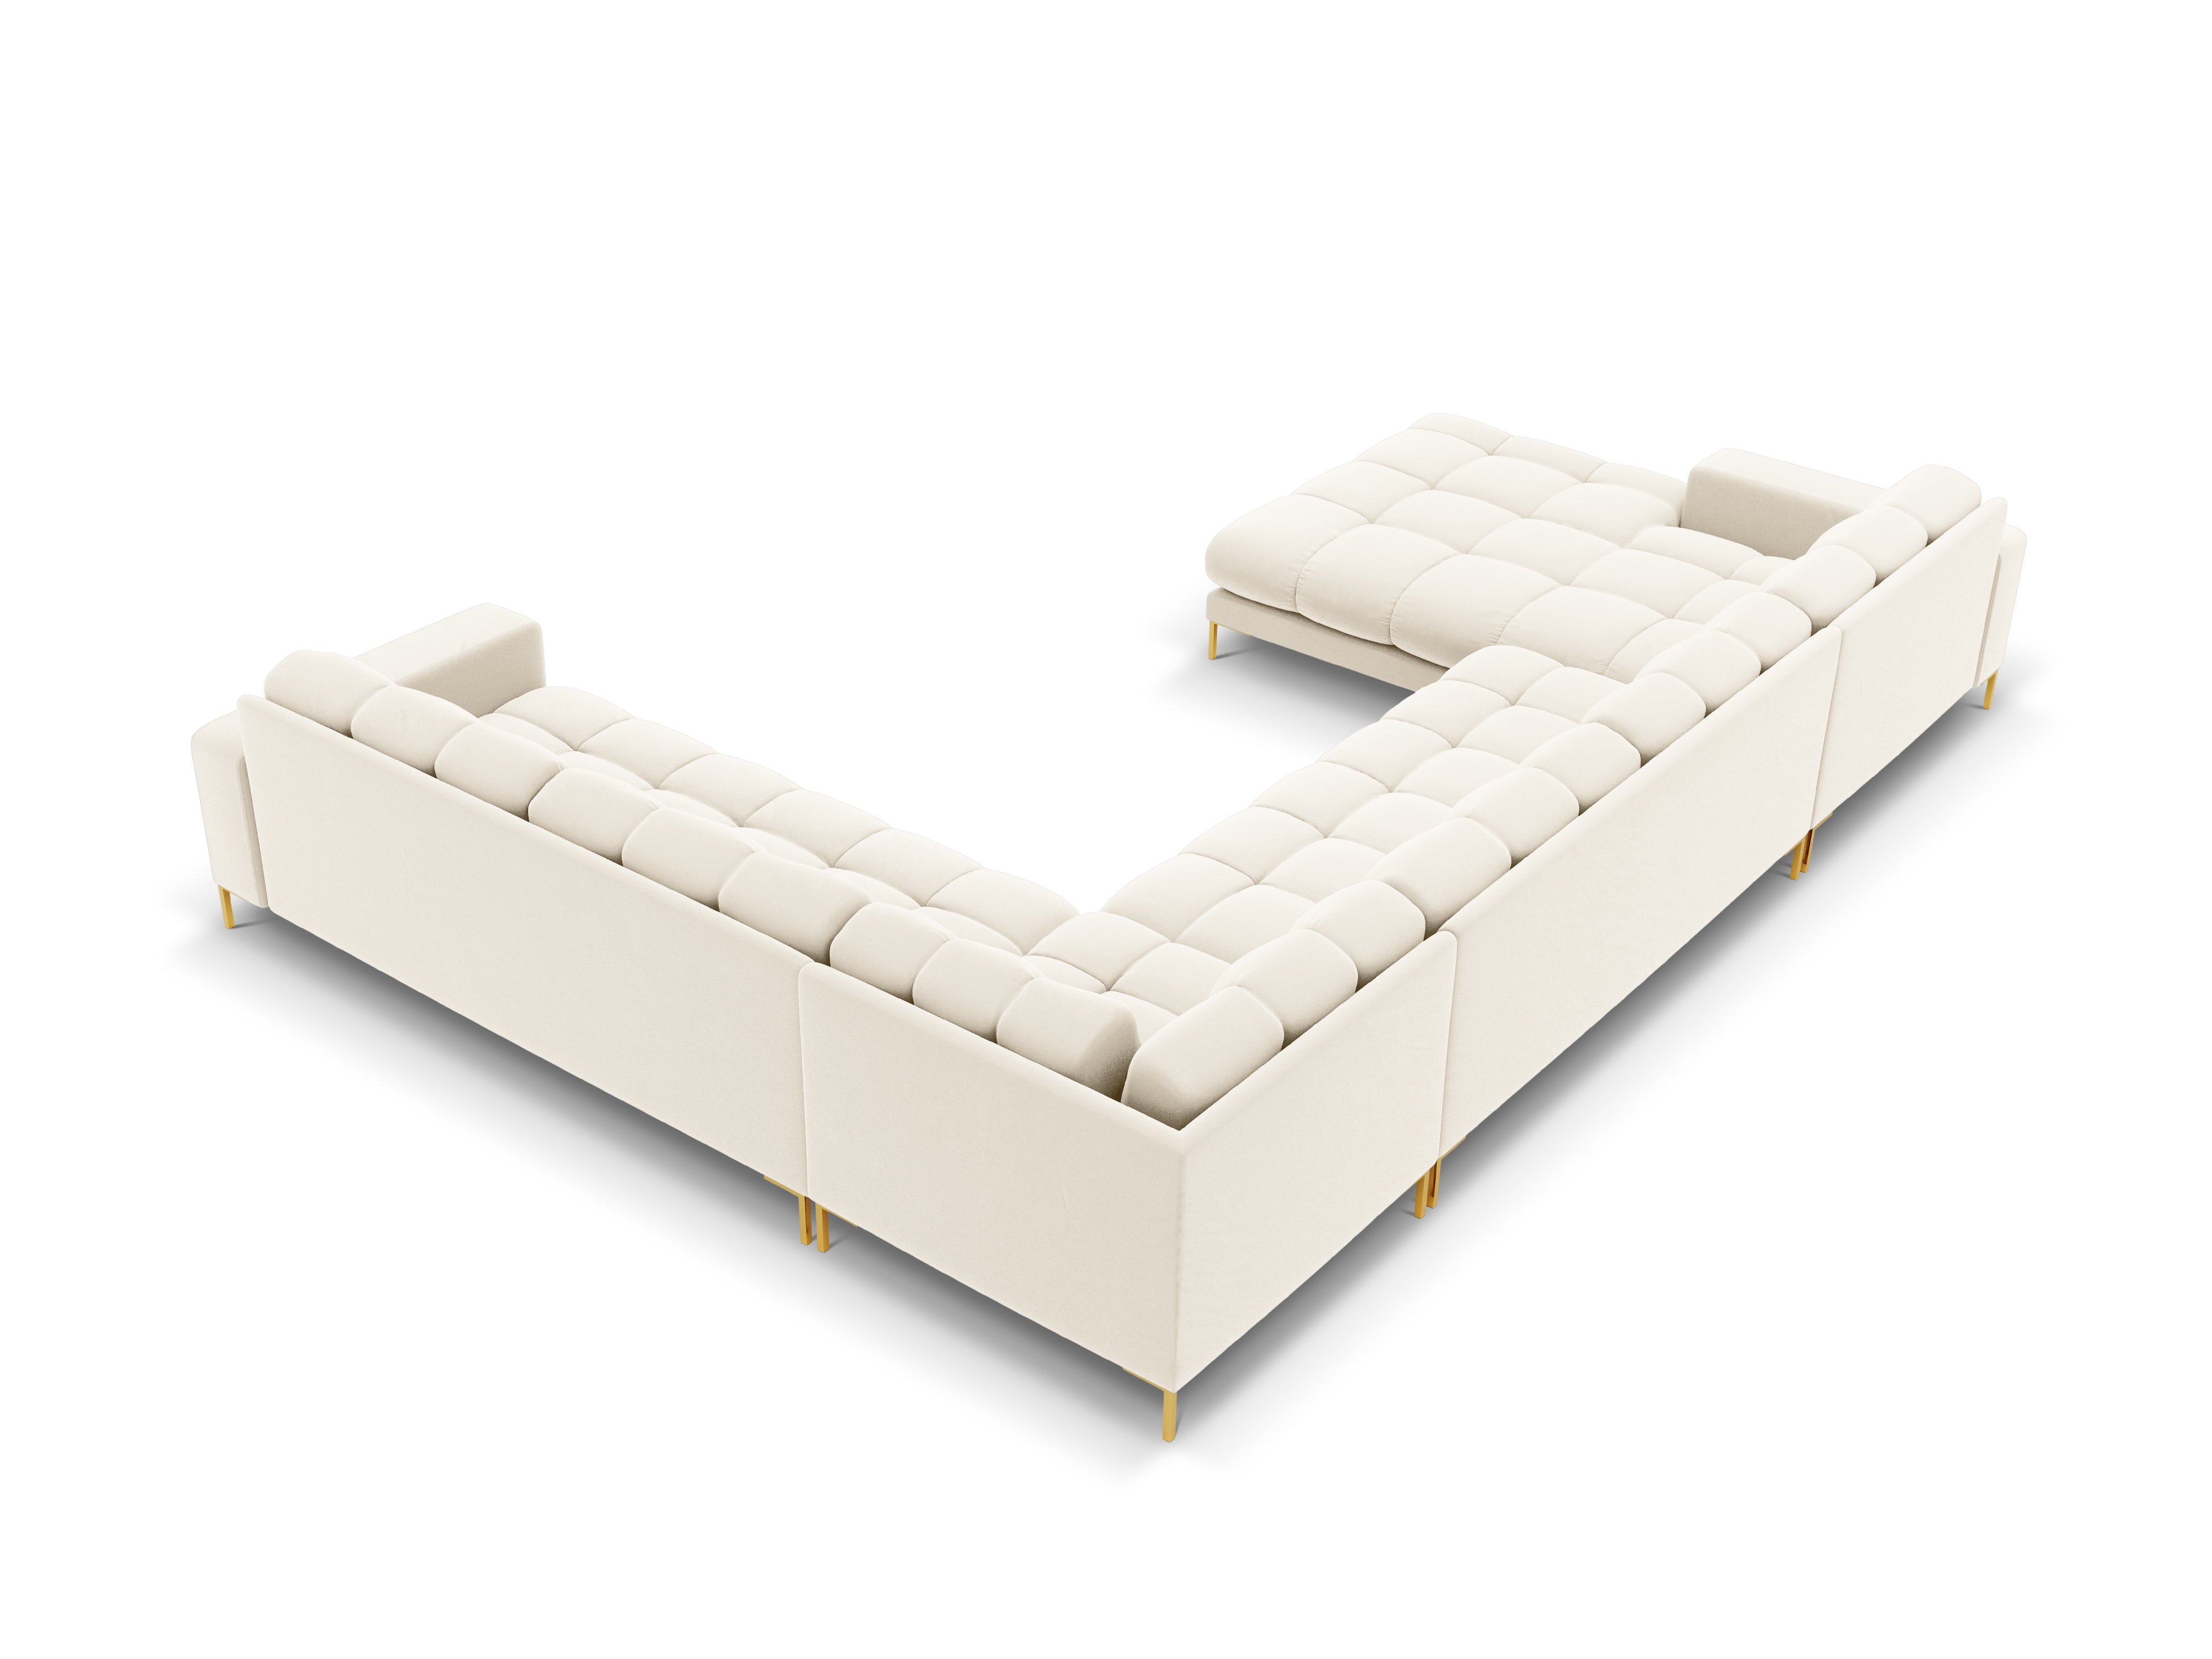 Panoramic velvet sofa right side 7 seater BALI light beige with gold base